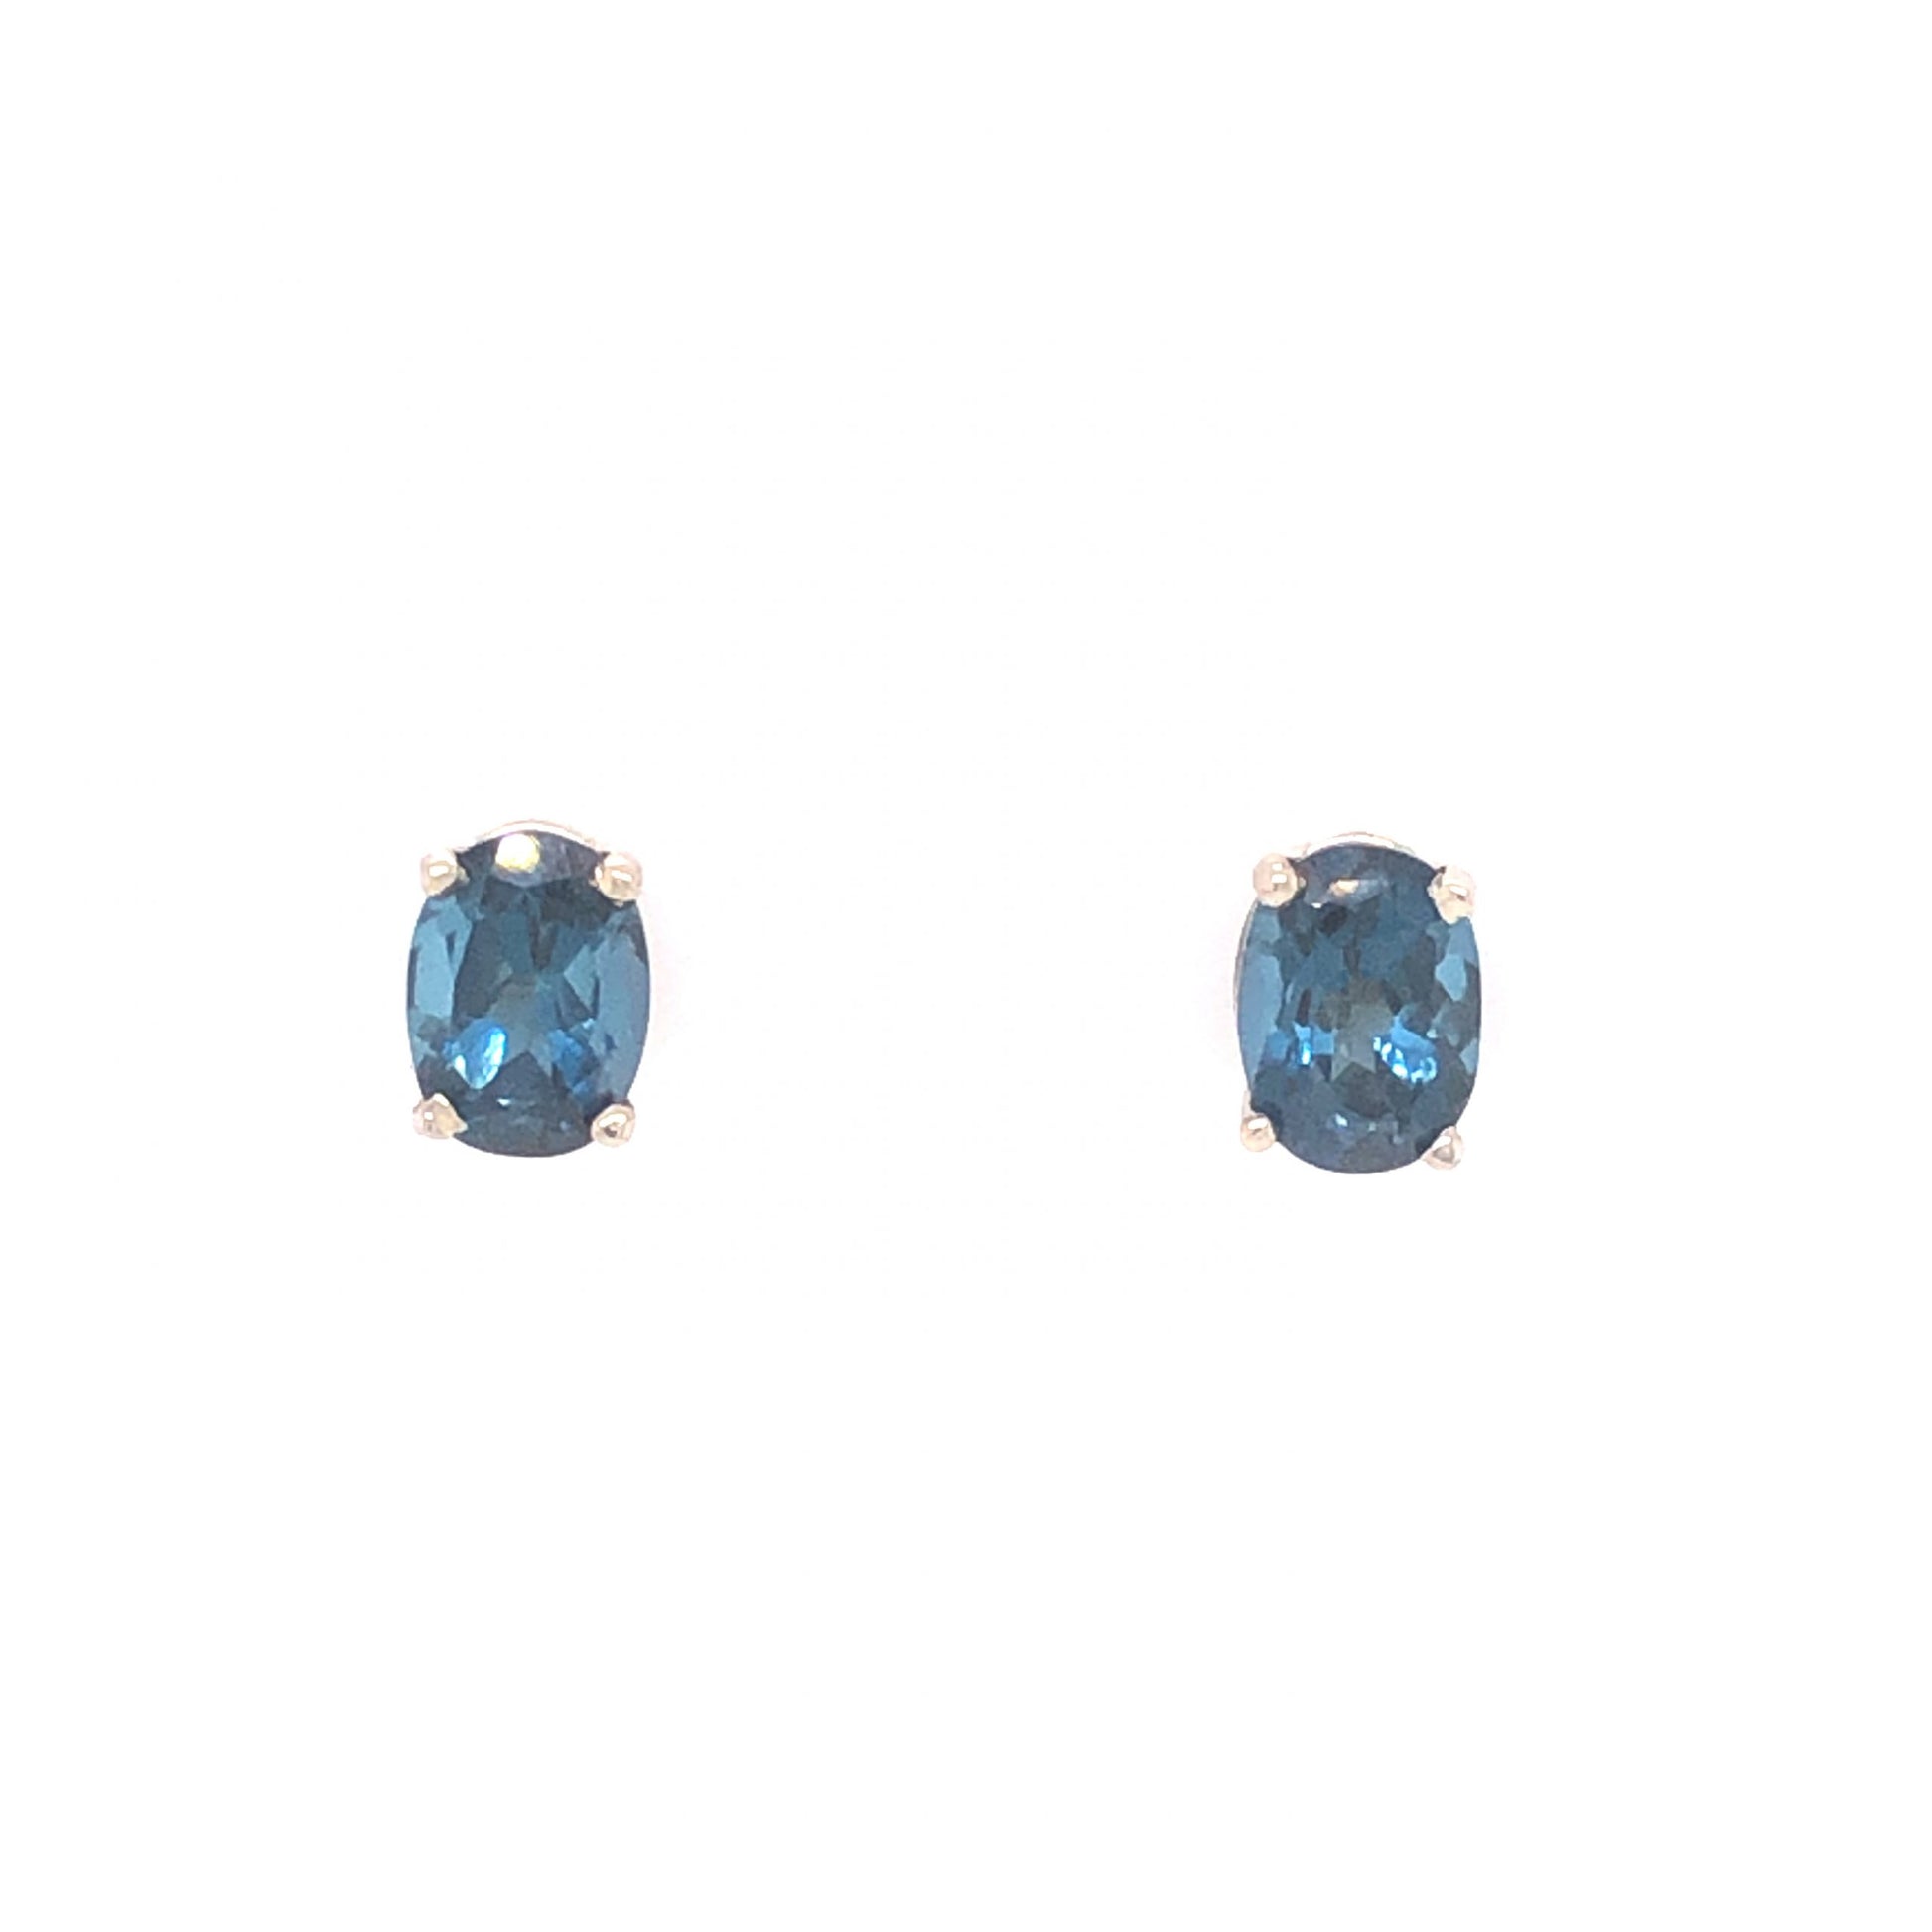 Oval Blue Tourmaline Earring Studs in 14k White Gold